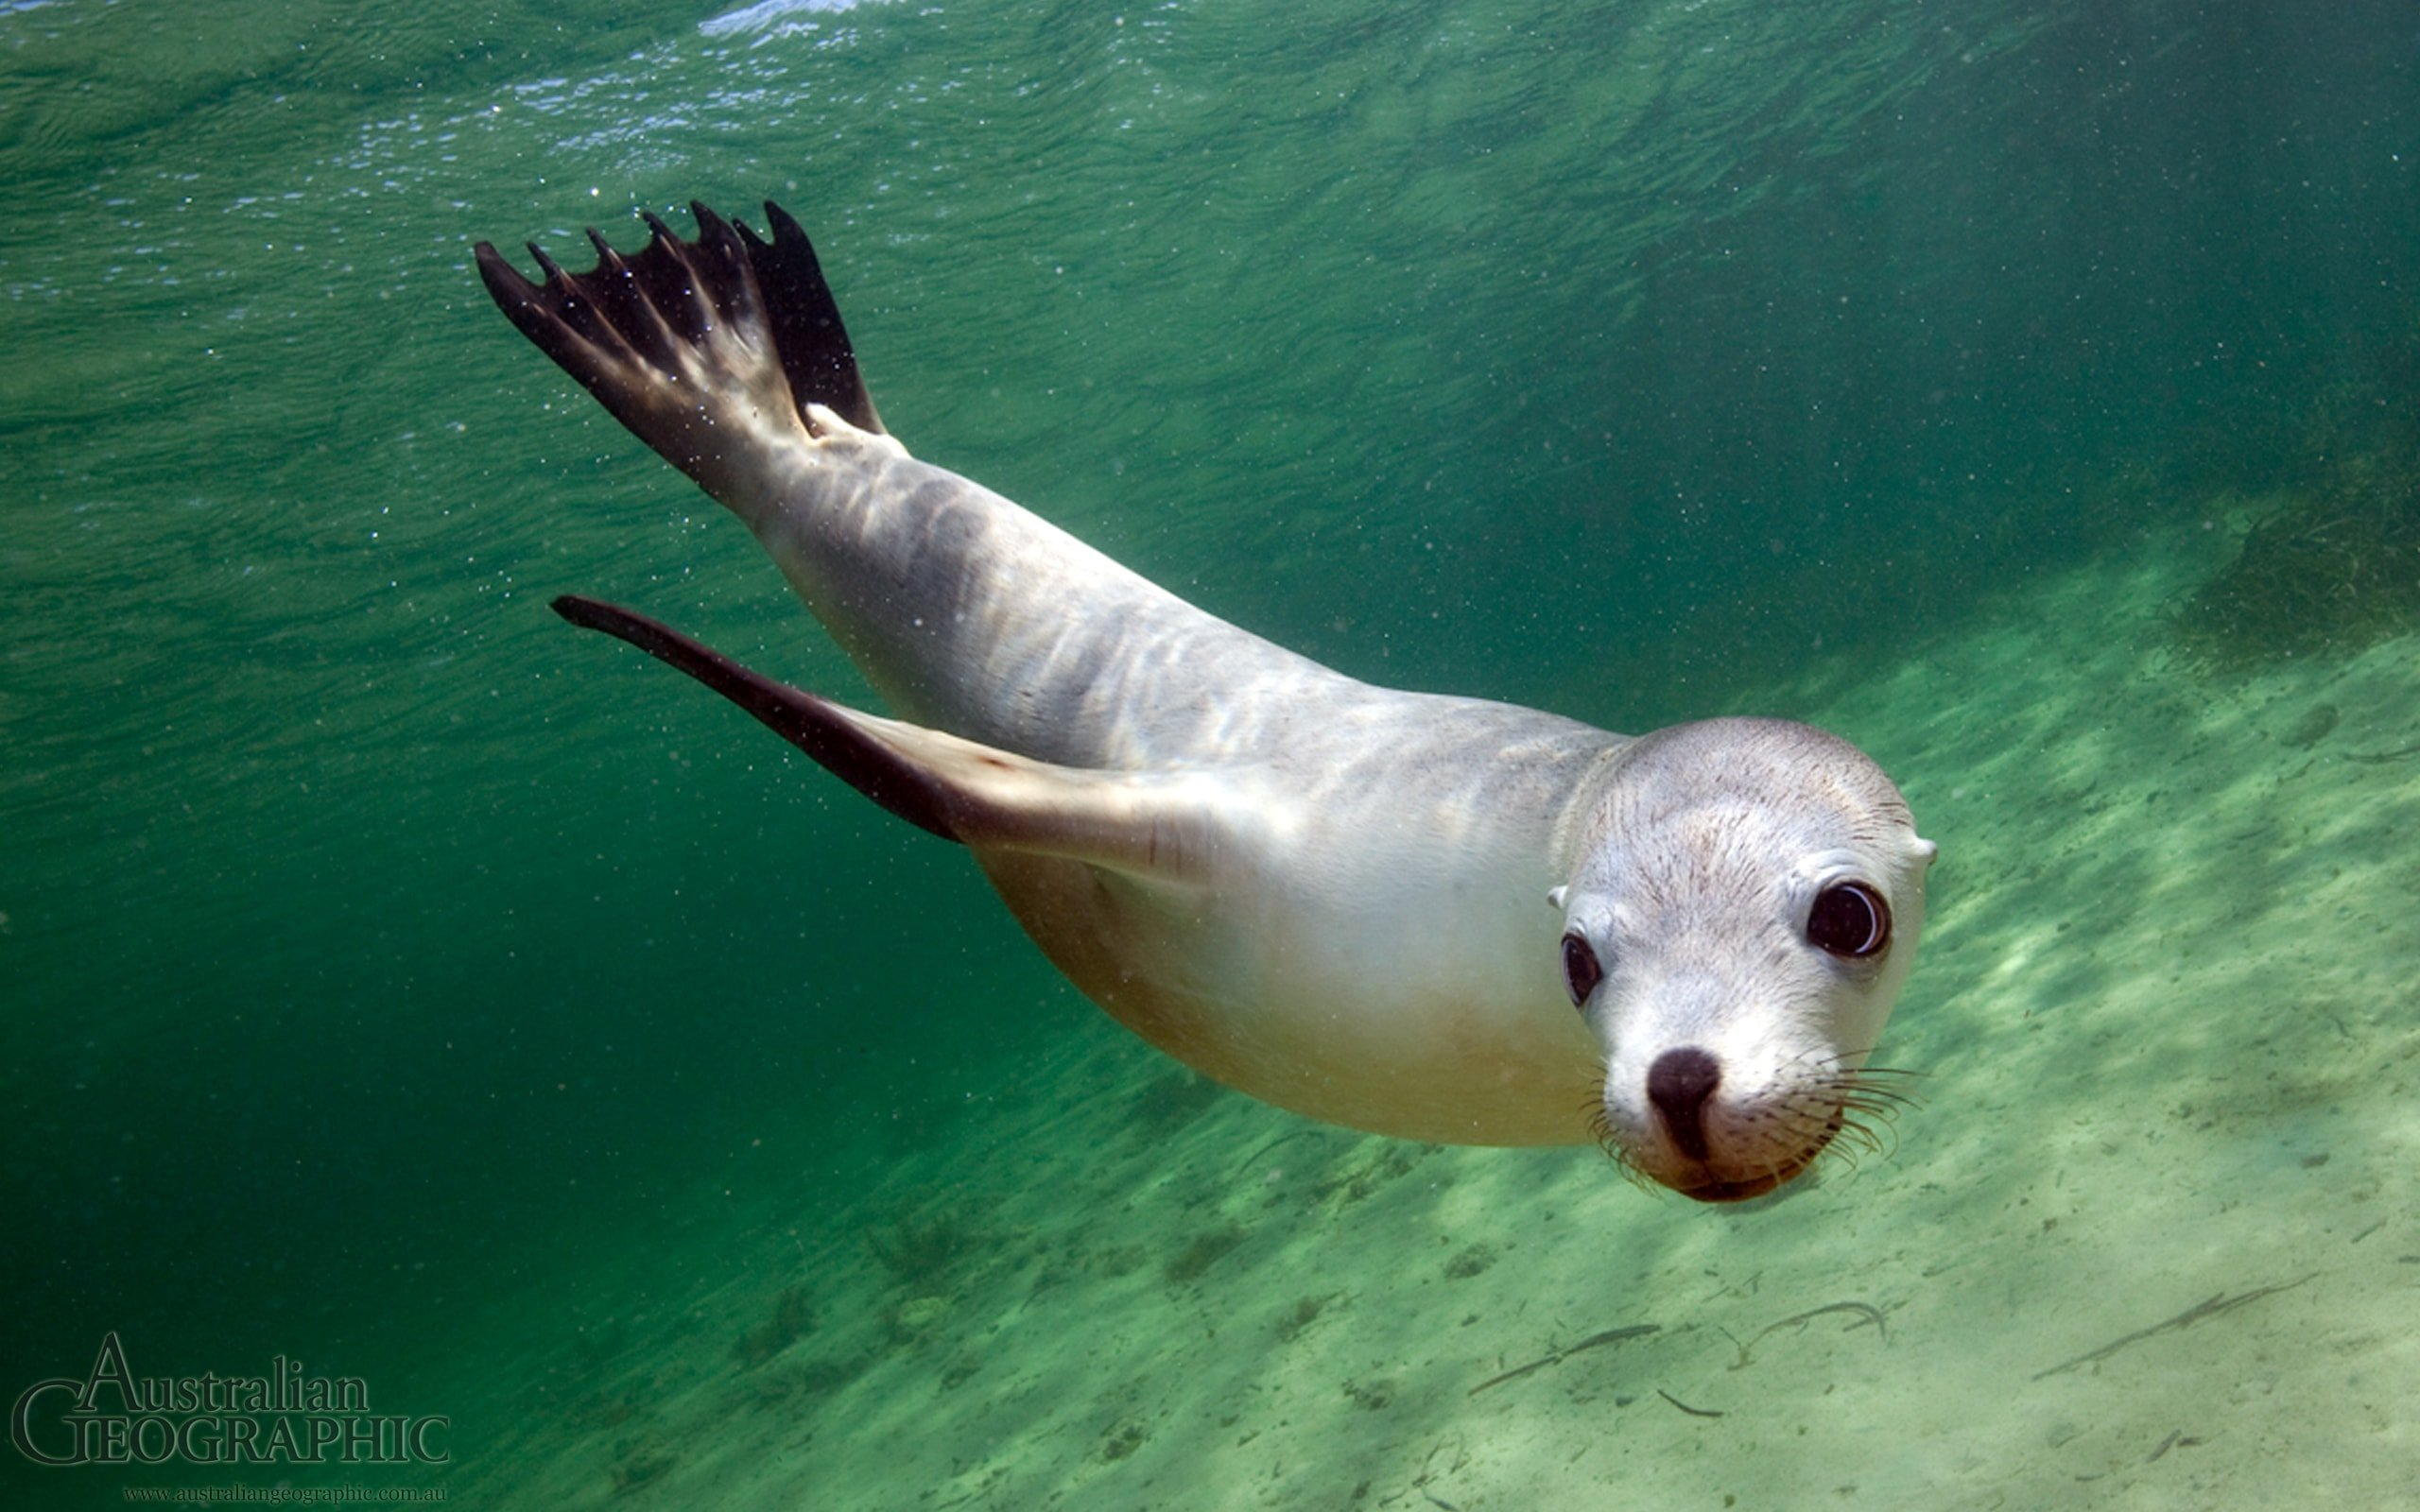 2560x1600 Sea lion, South Australia Australian Geographic